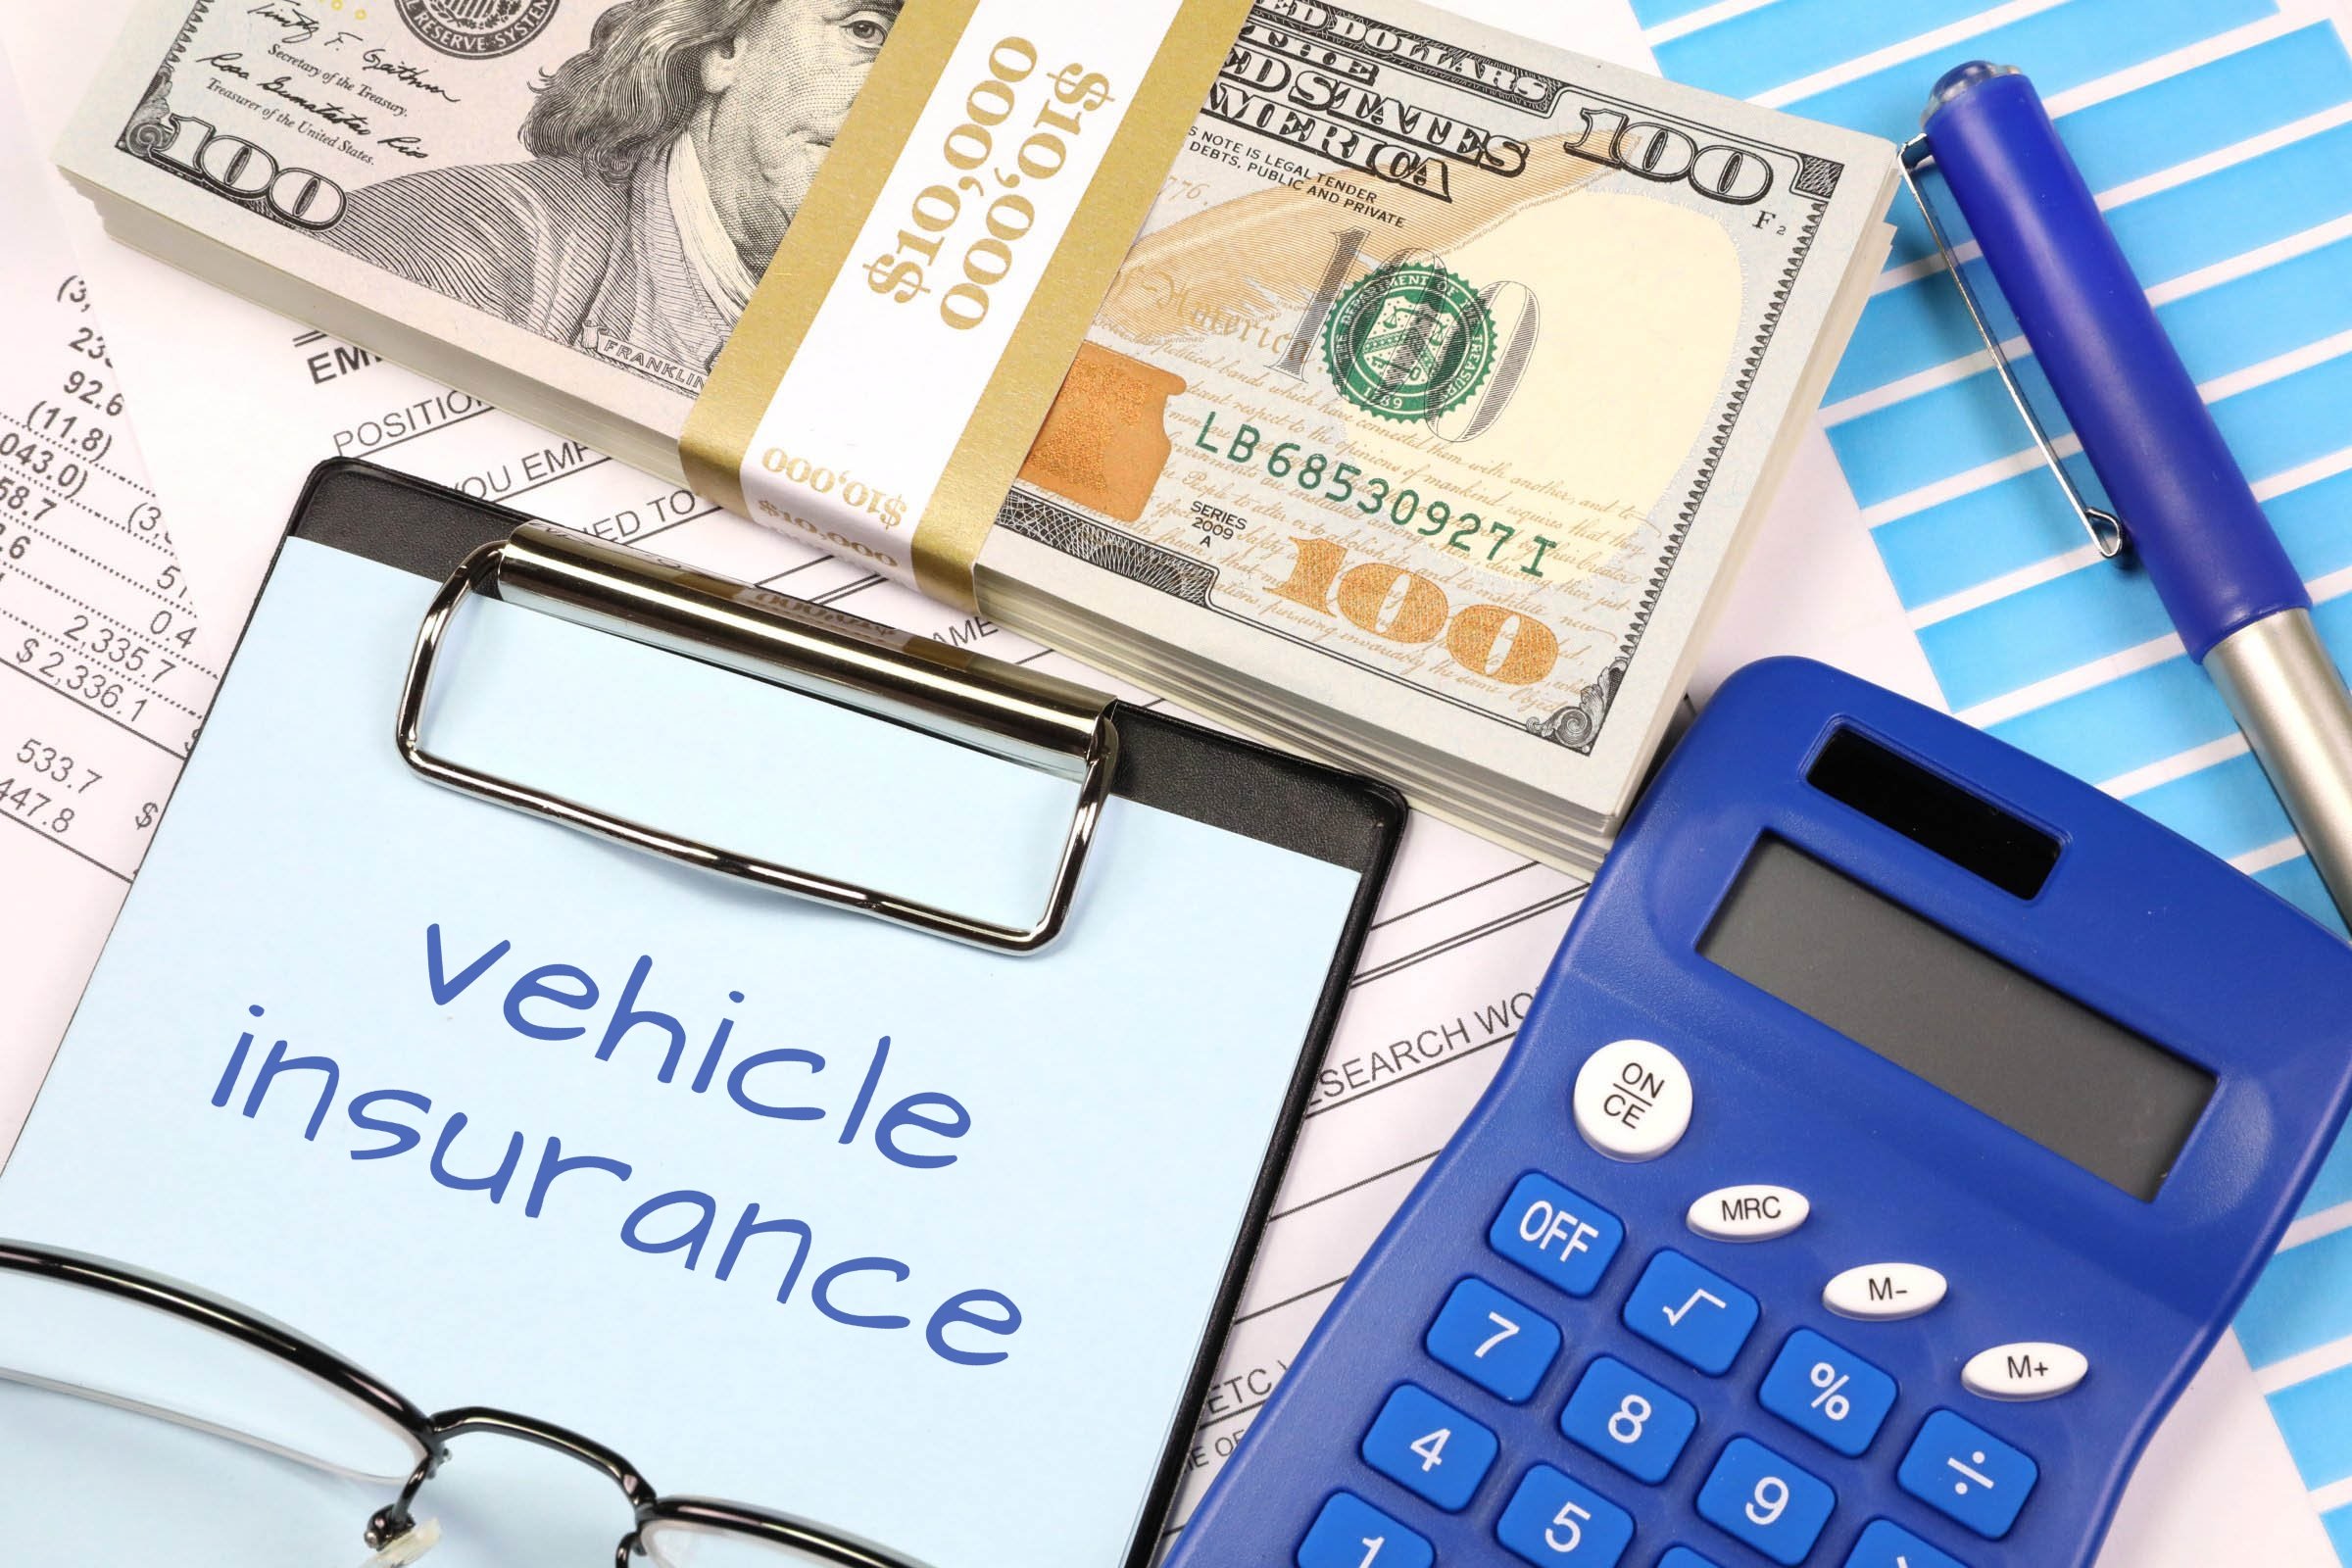 Vehicle Insurance